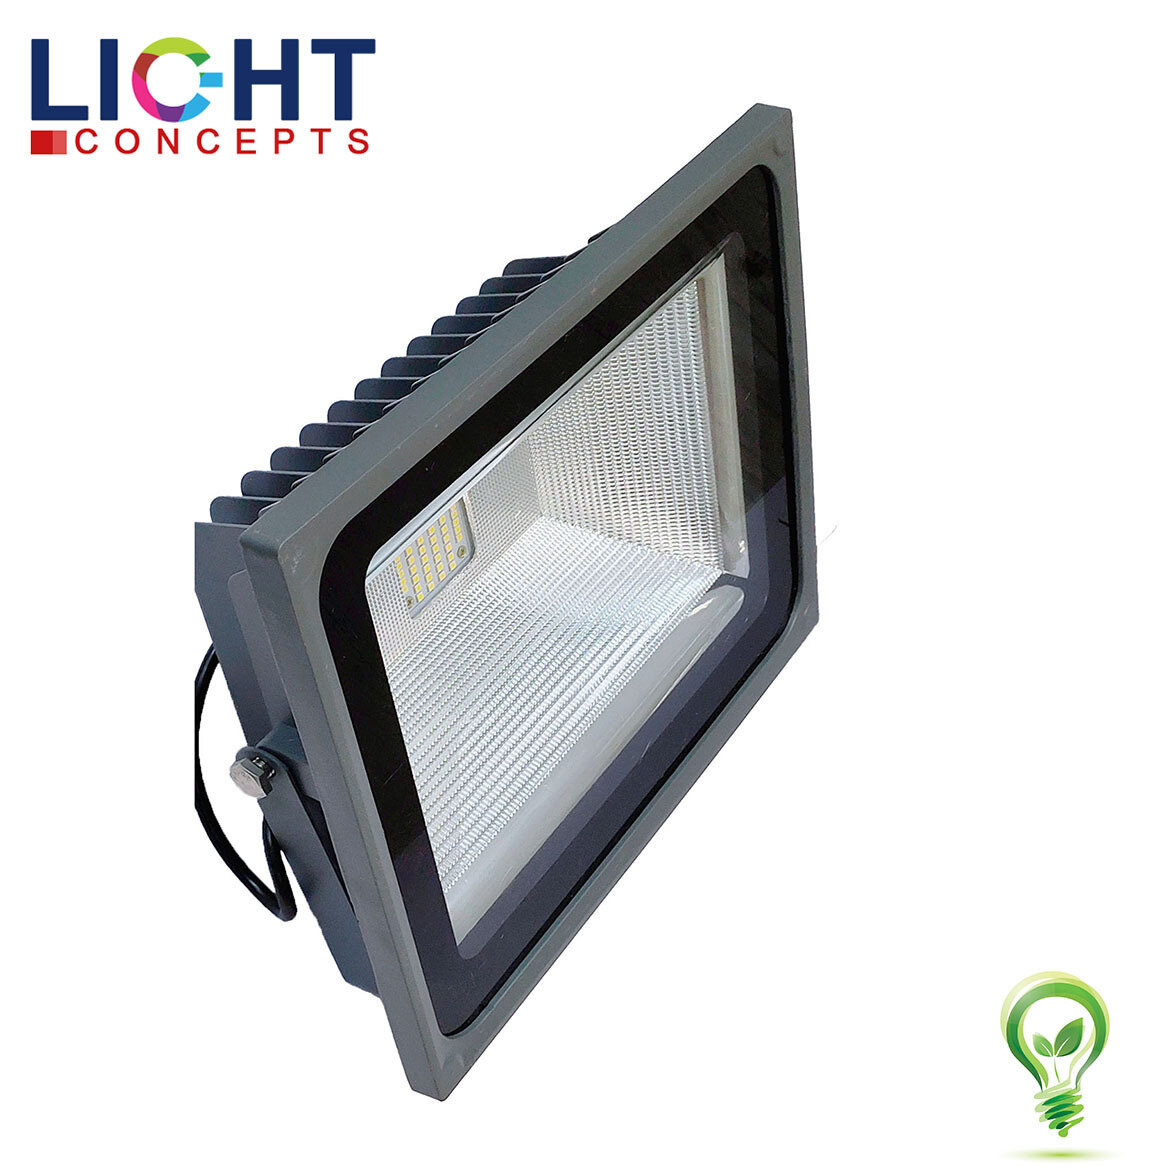 Light concepts LED flood light